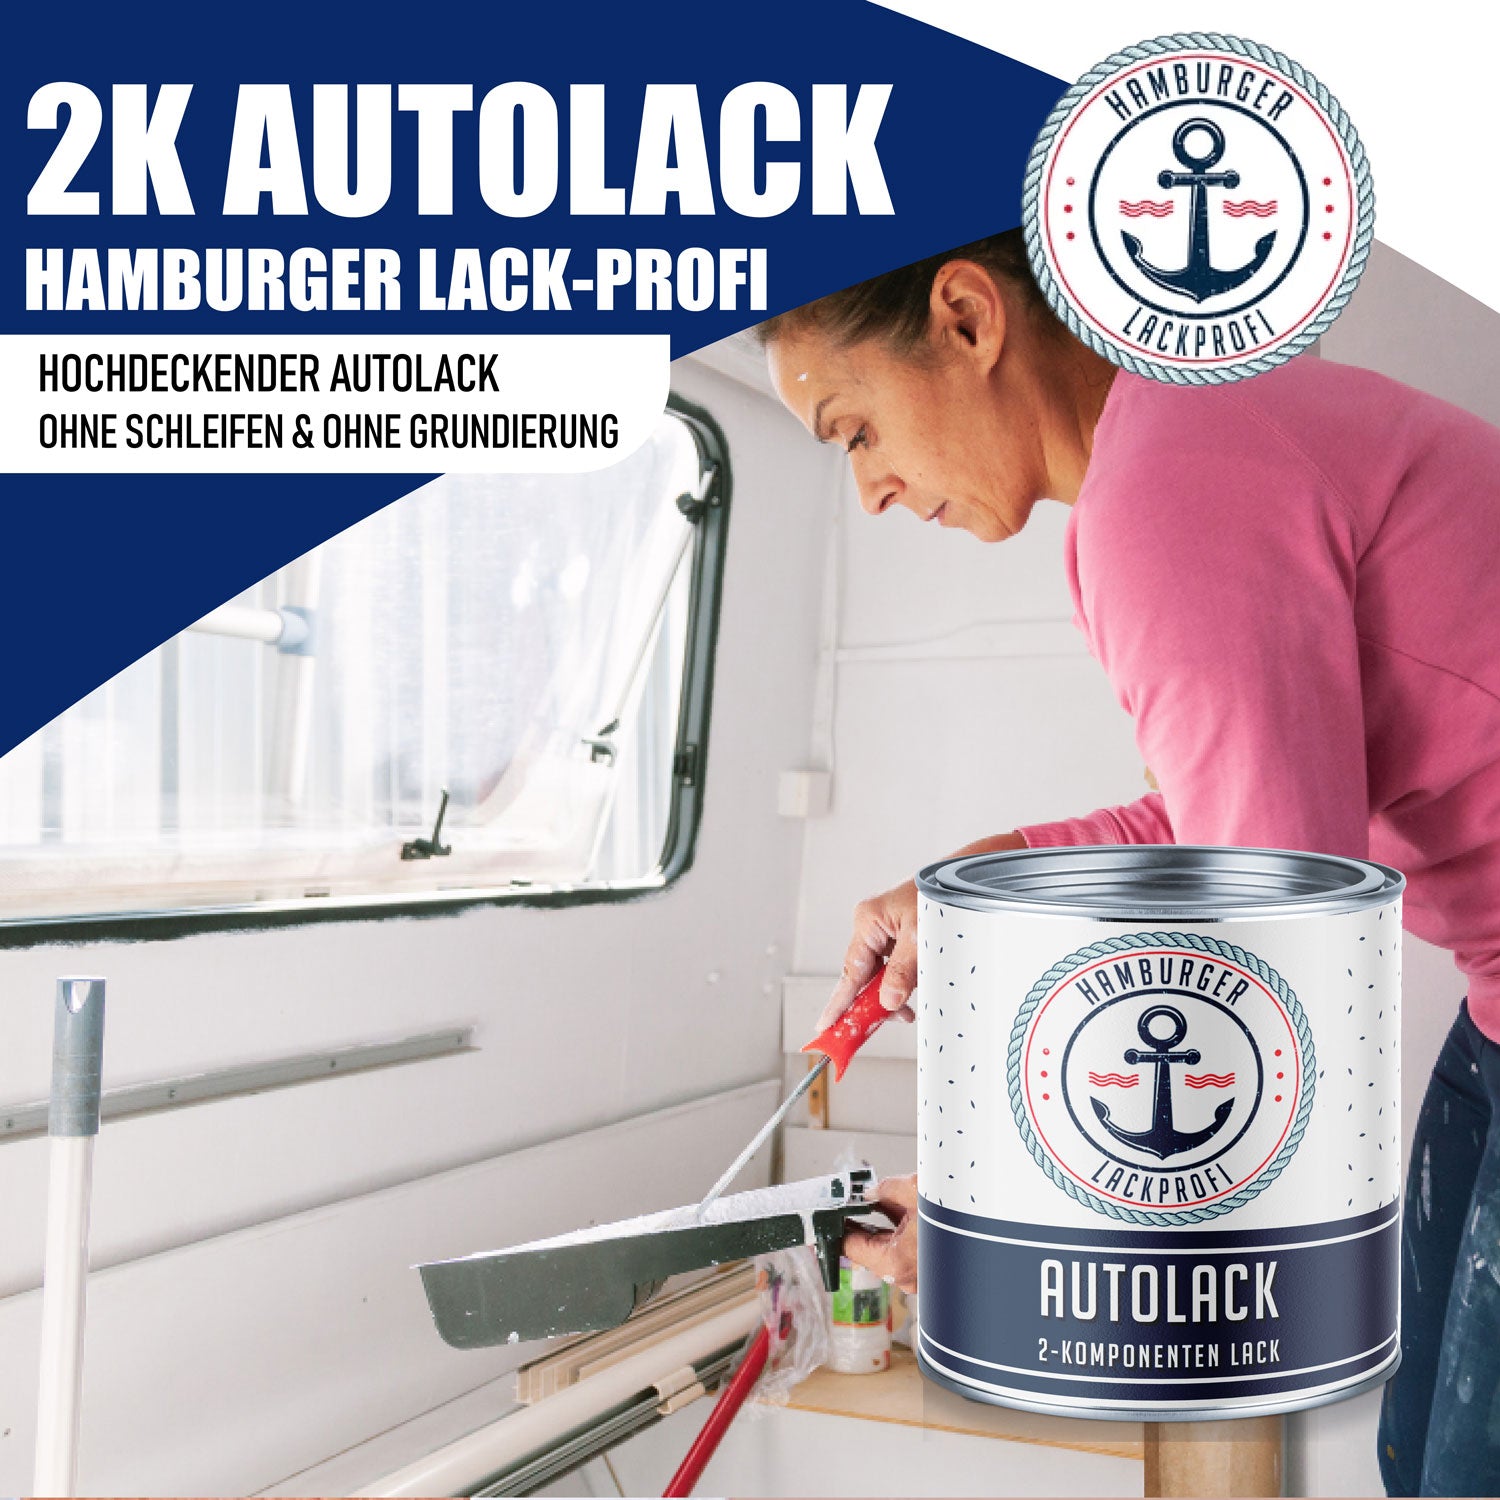 Hamburger Lack-Profi 2K Autolack in Feuerrot RAL 3000 mit Lackierset (X300) & Verdünnung (1 L) - 30% Sparangebot